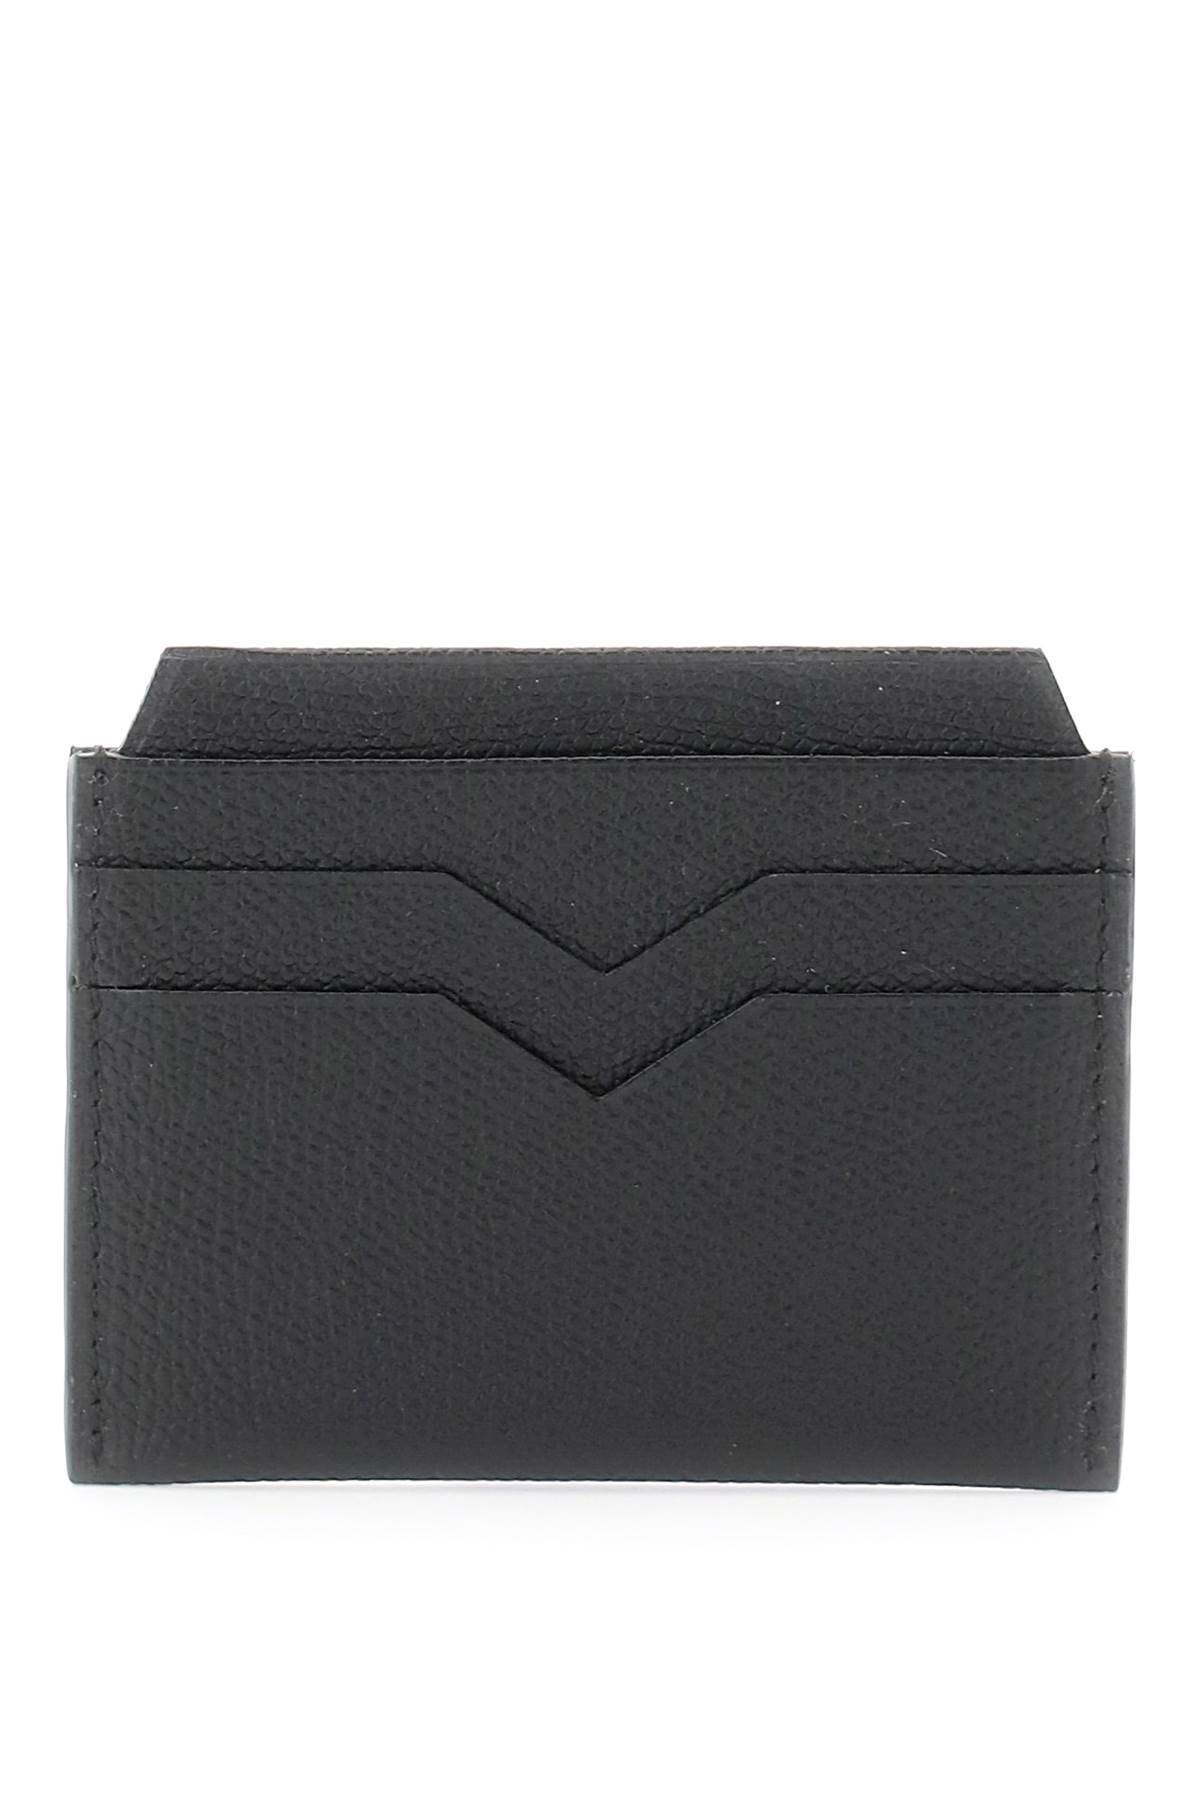 Valextra Leather Cardholder In Black